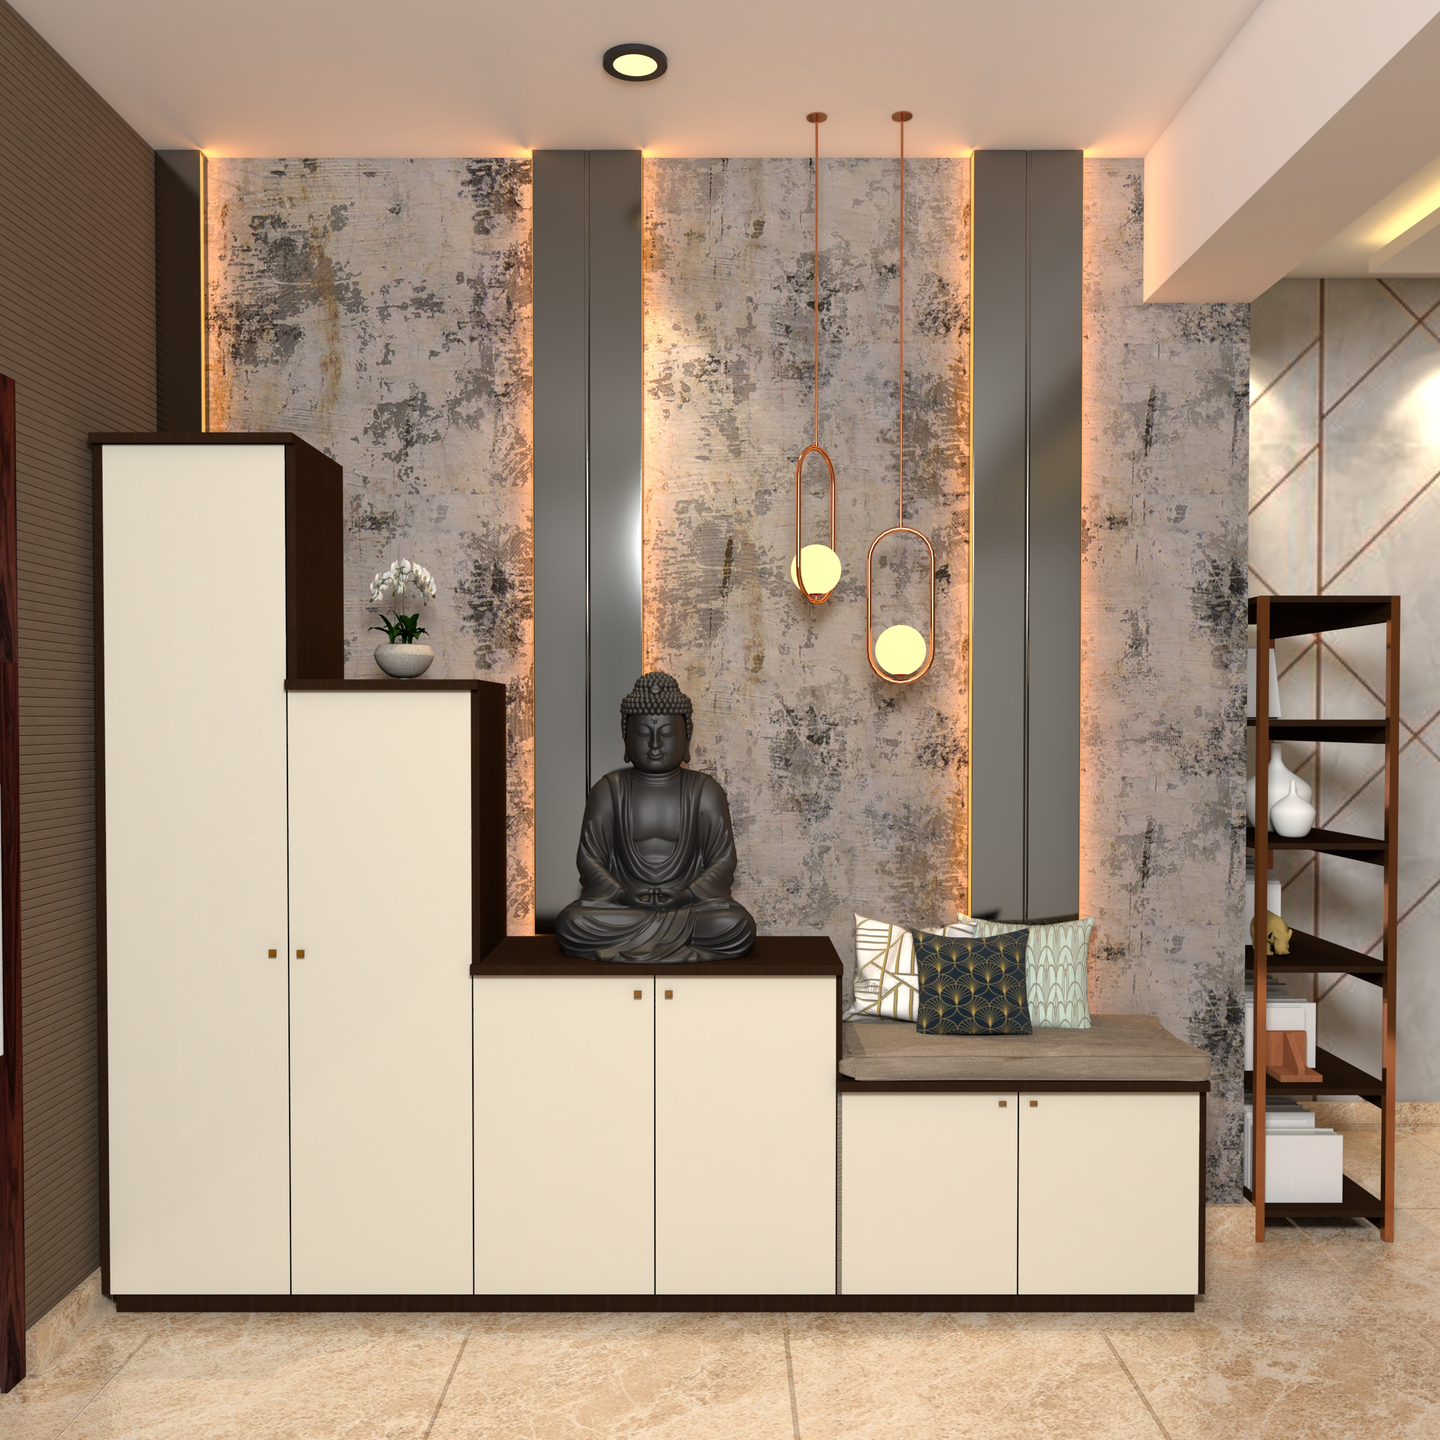 Foyer Design With Buddha - Livspace